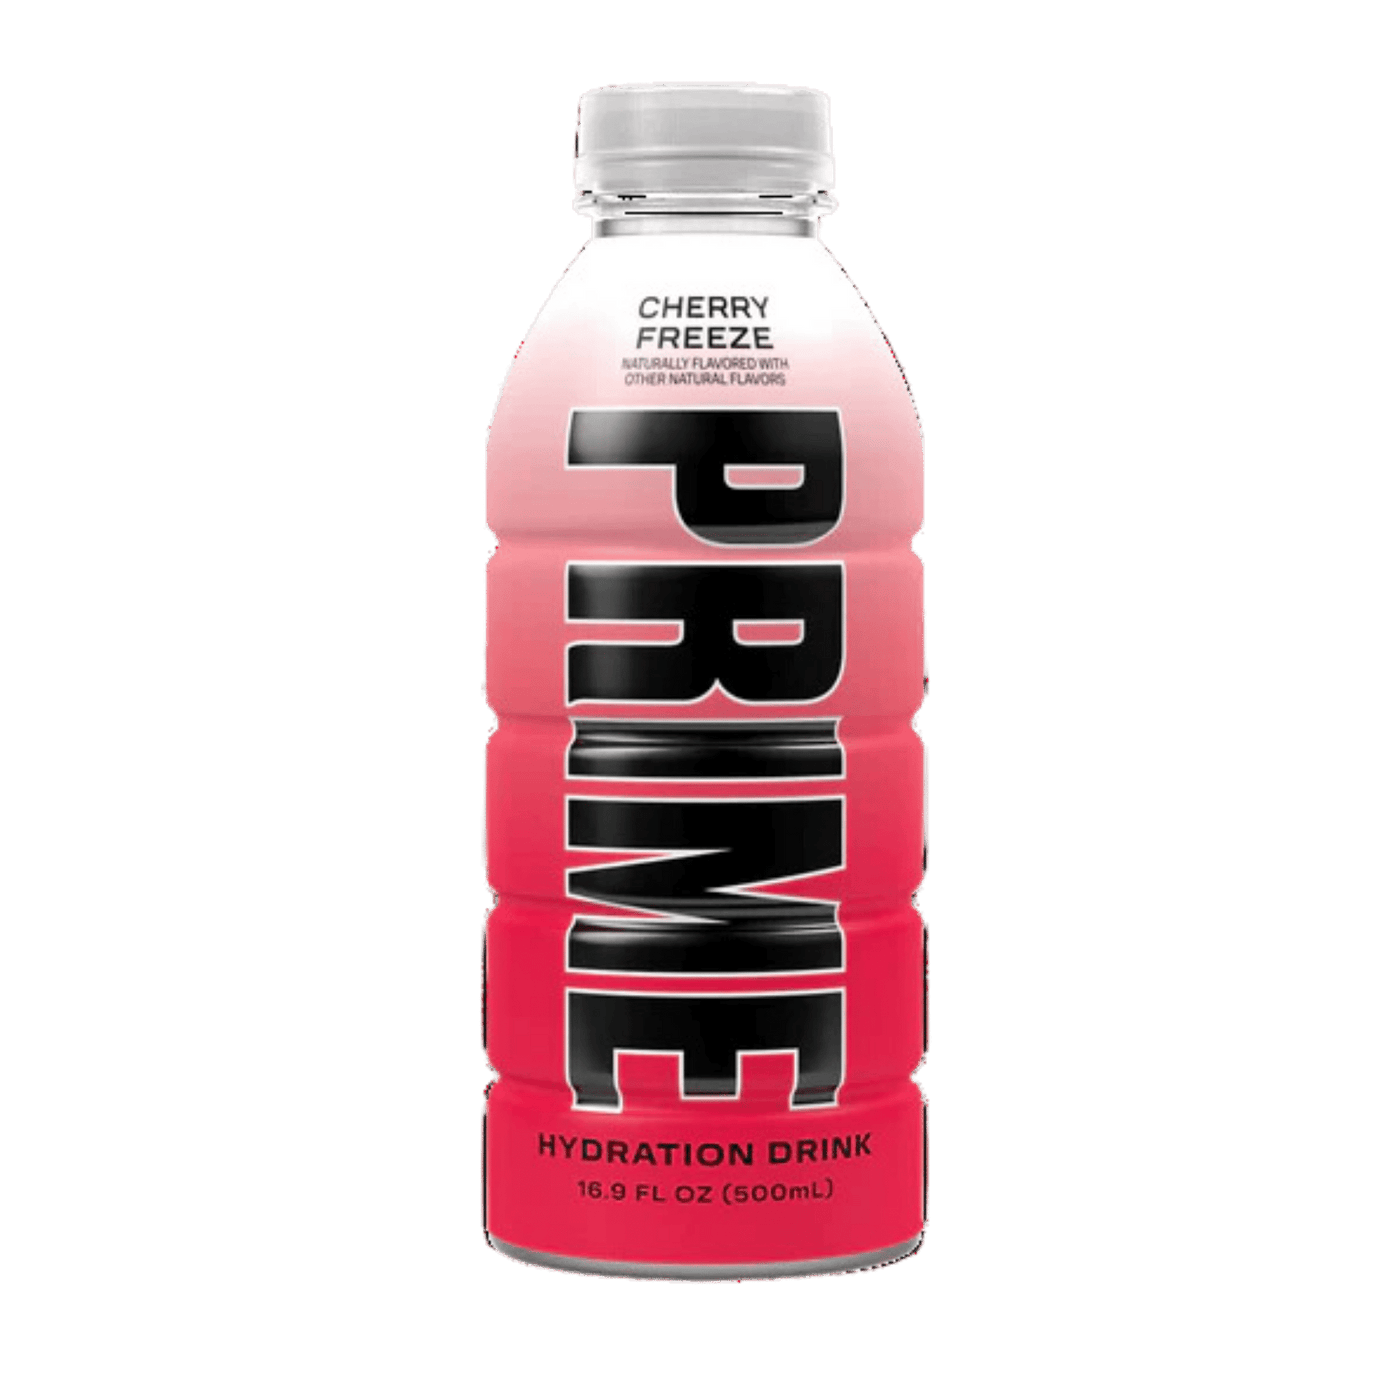 Prime Hydration